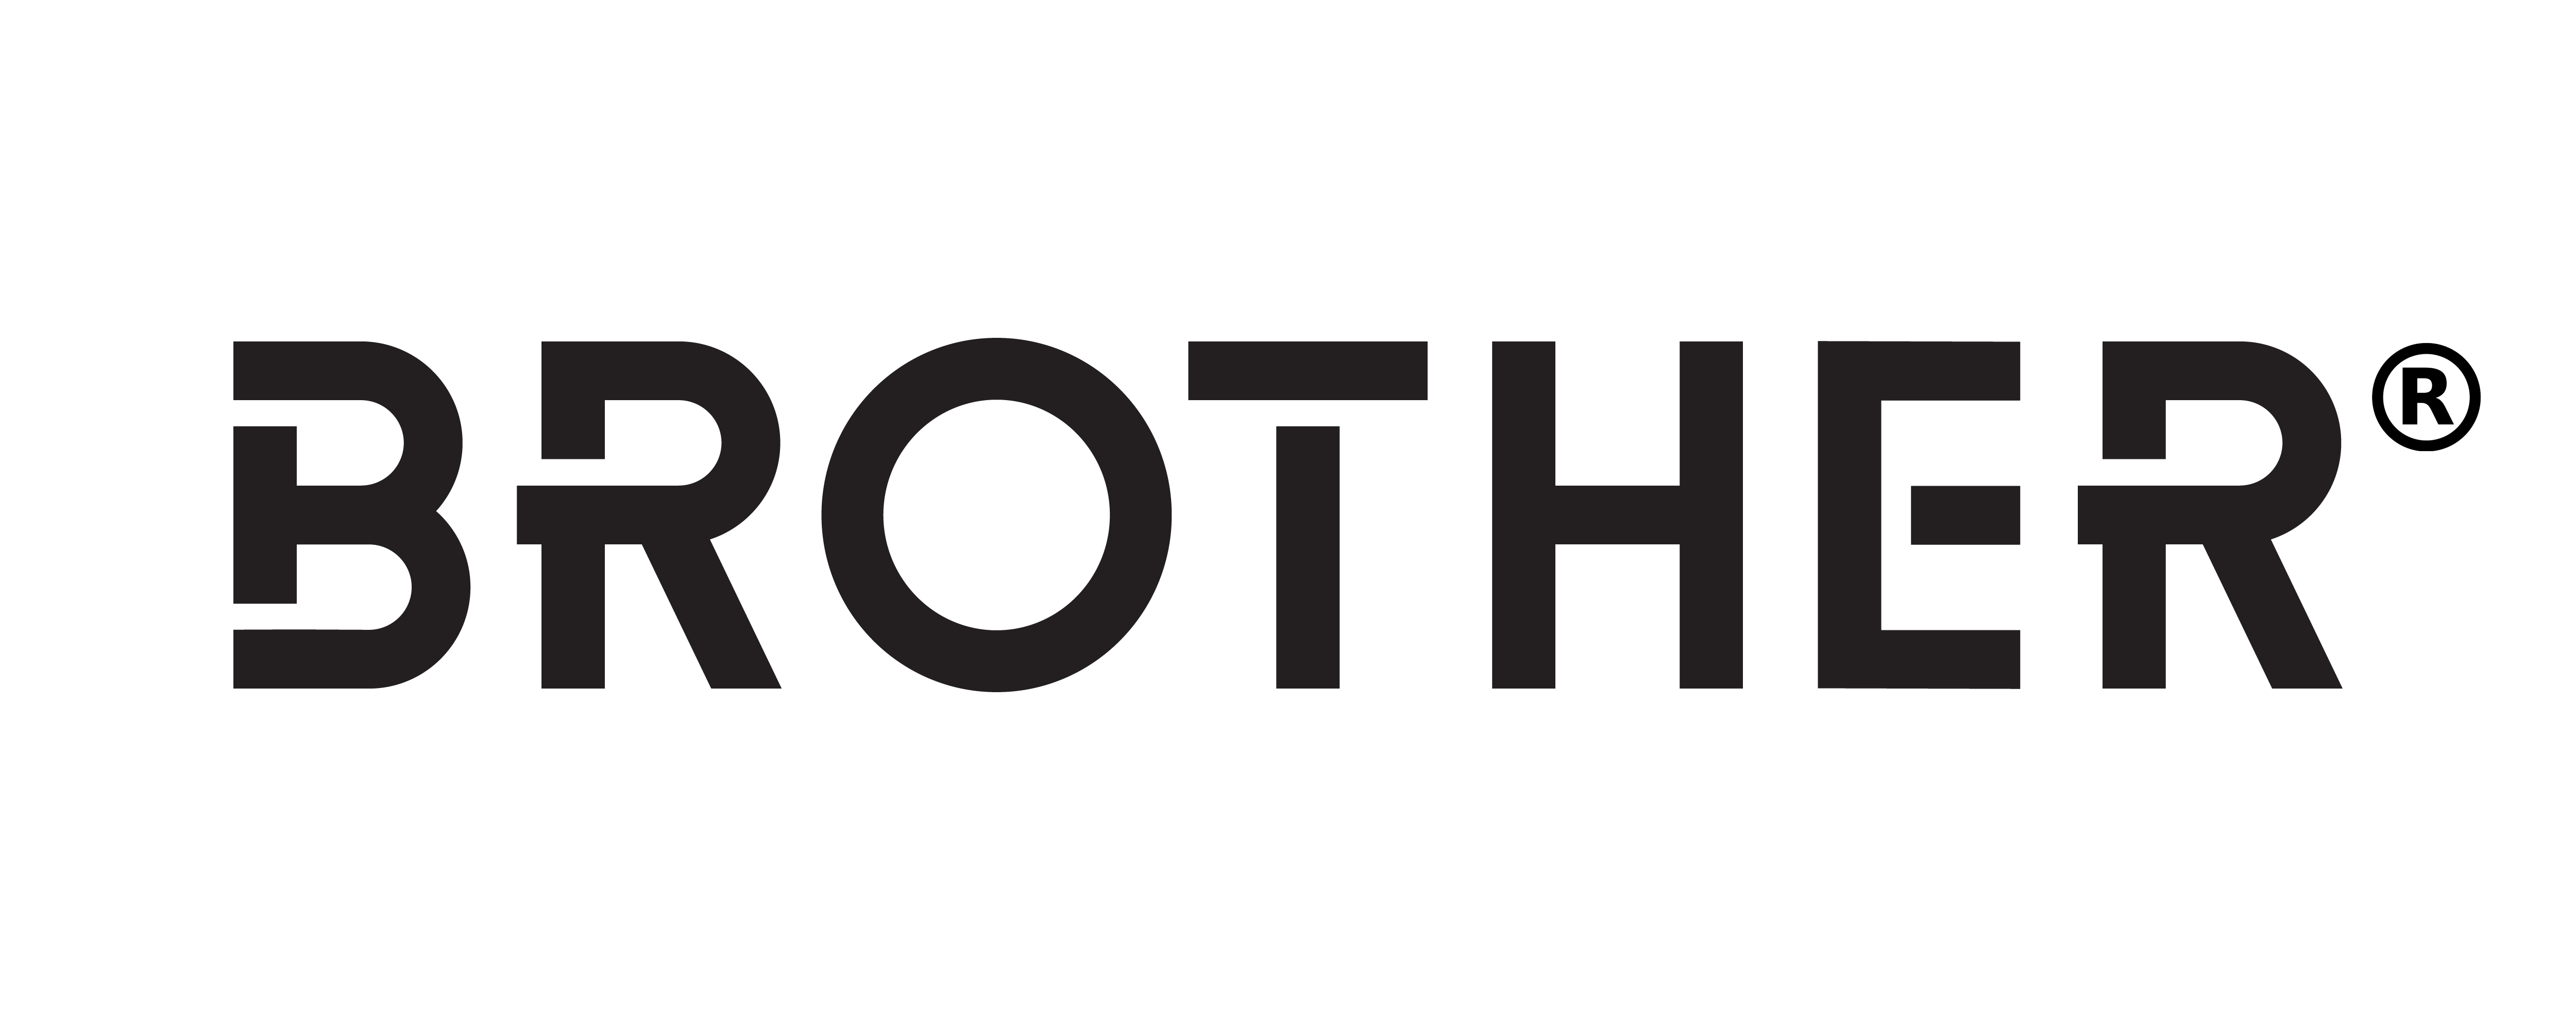 Brothers logo | Photo album quote, Text logo, Word mark logo